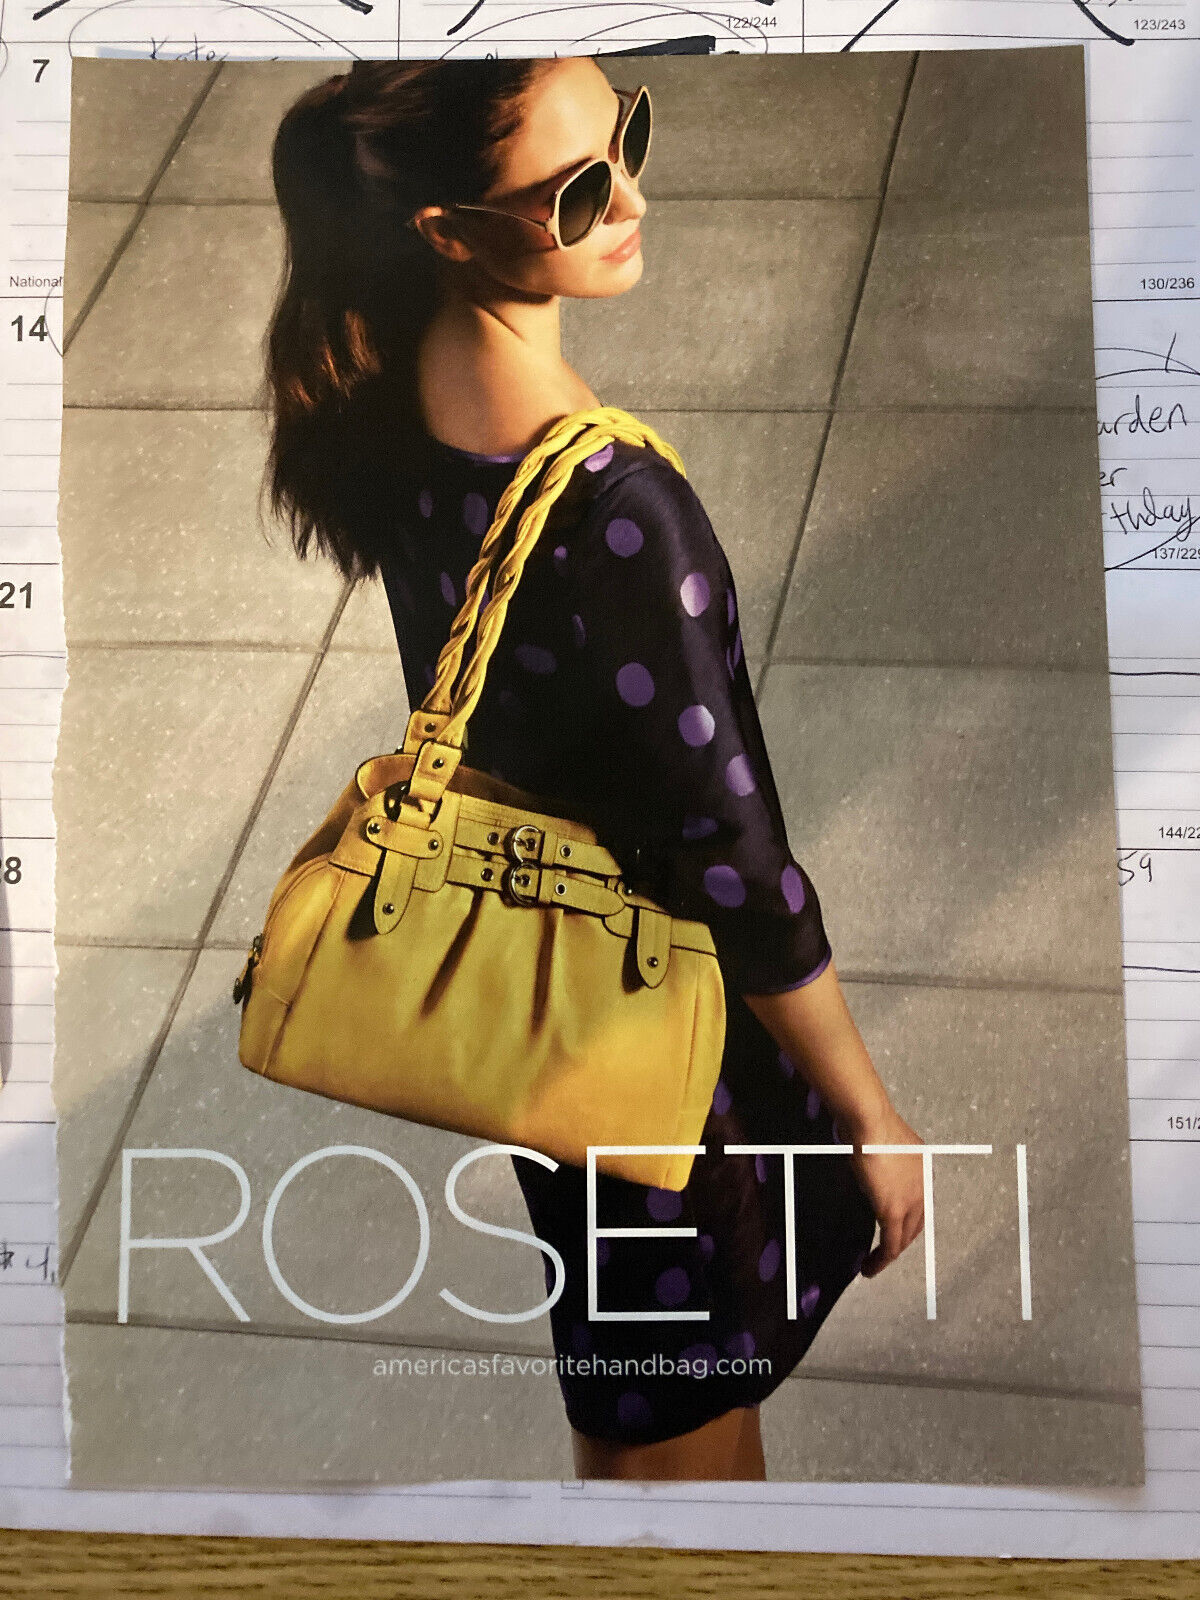 2012 Rosetti Ad